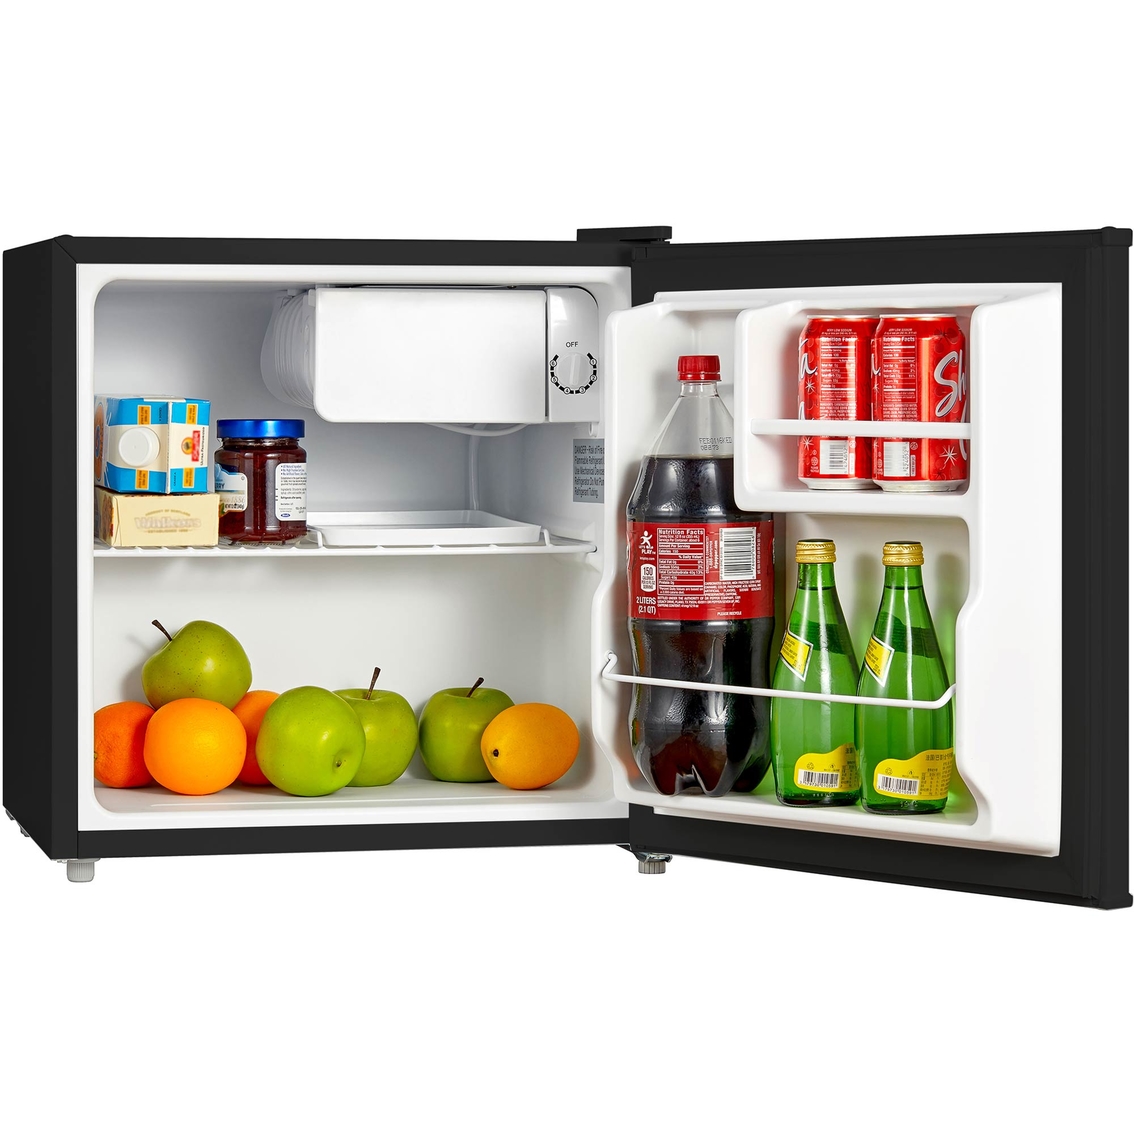 Midea 1.6 cu. ft. Single Door Compact Refrigerator - Image 2 of 2